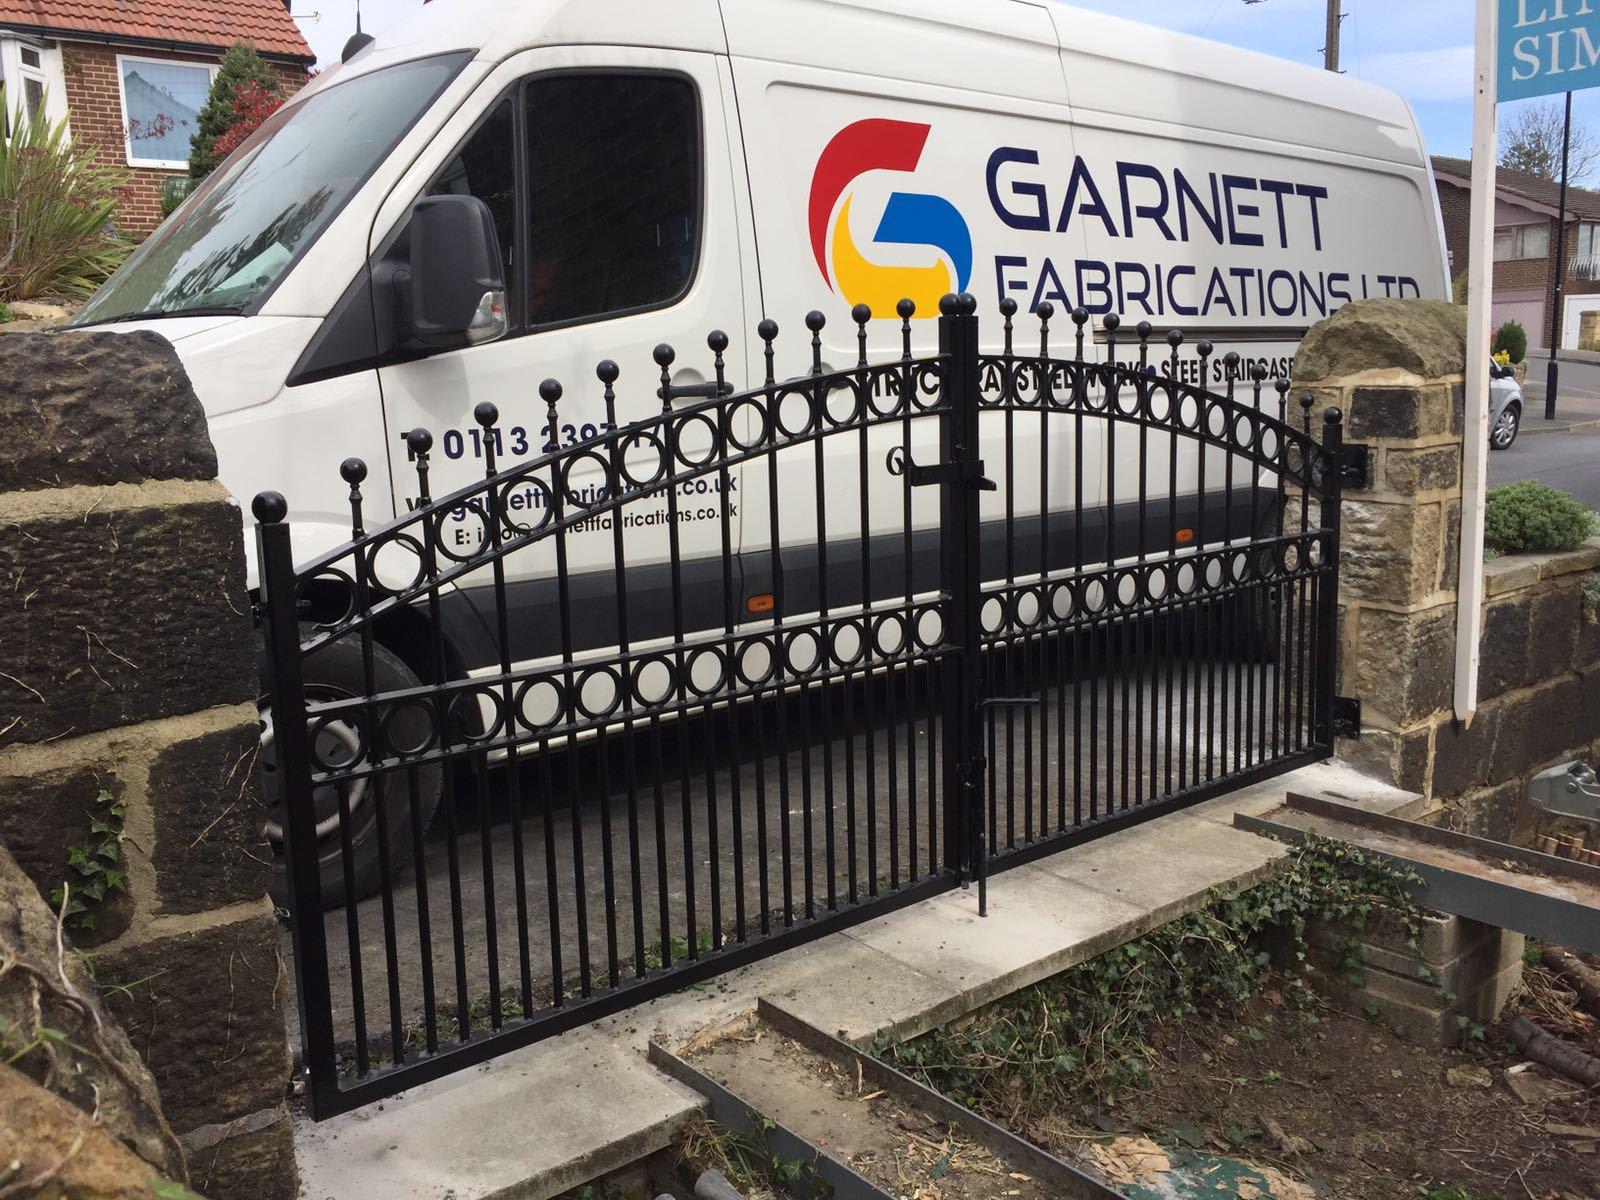 Garnett Fabrications Ltd Leeds 01132 397176